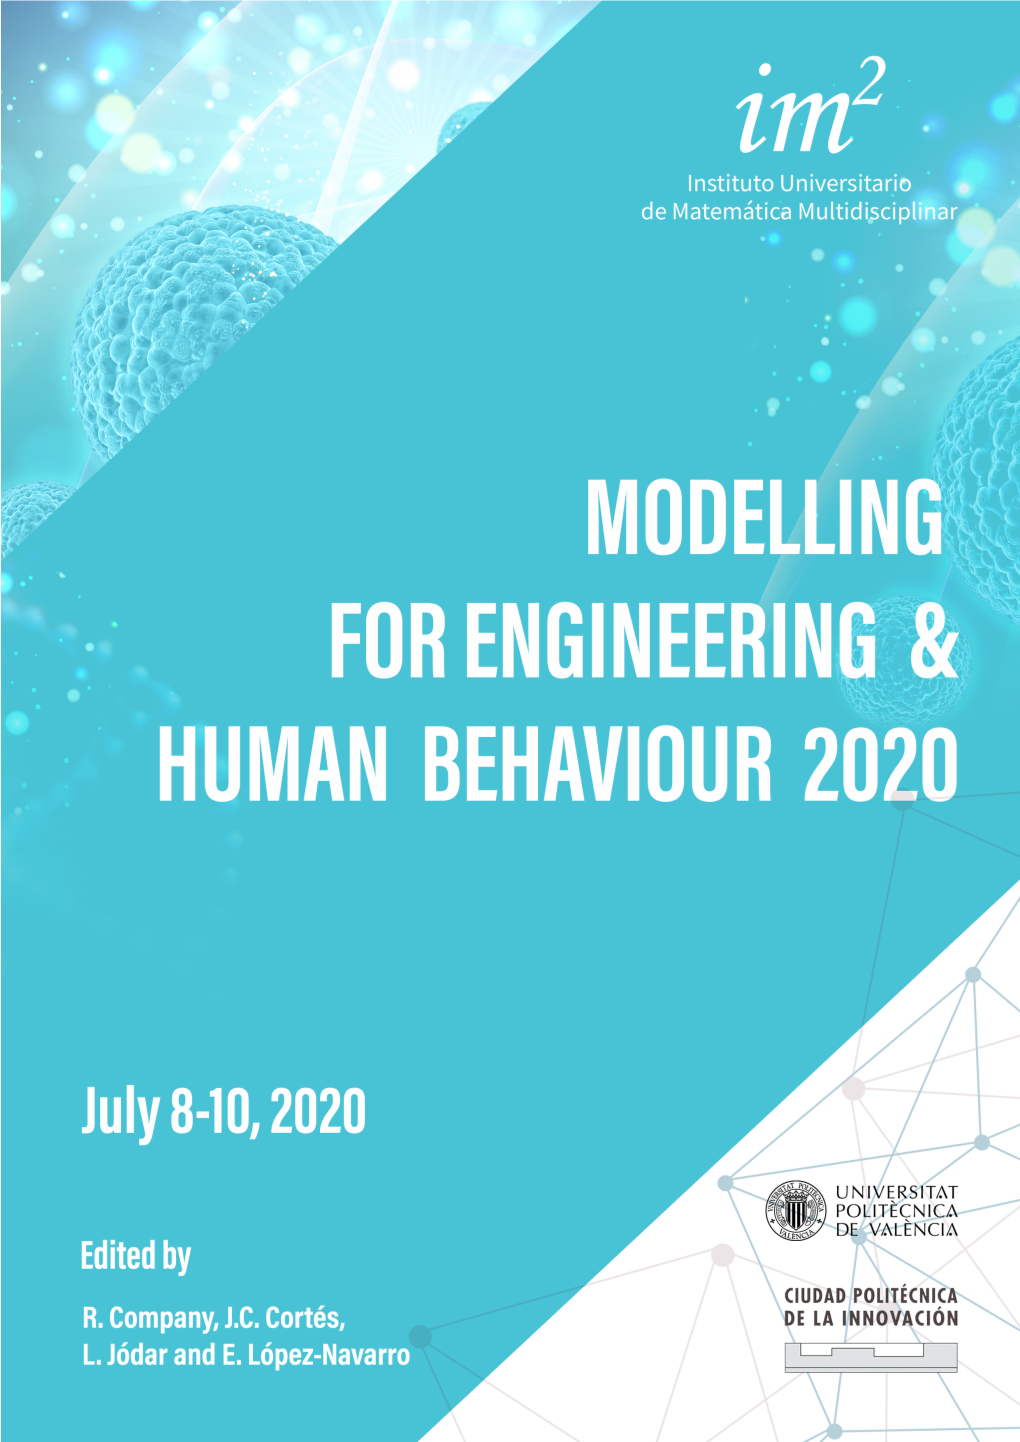 Modelling for Engineering & Human Behaviour 2020